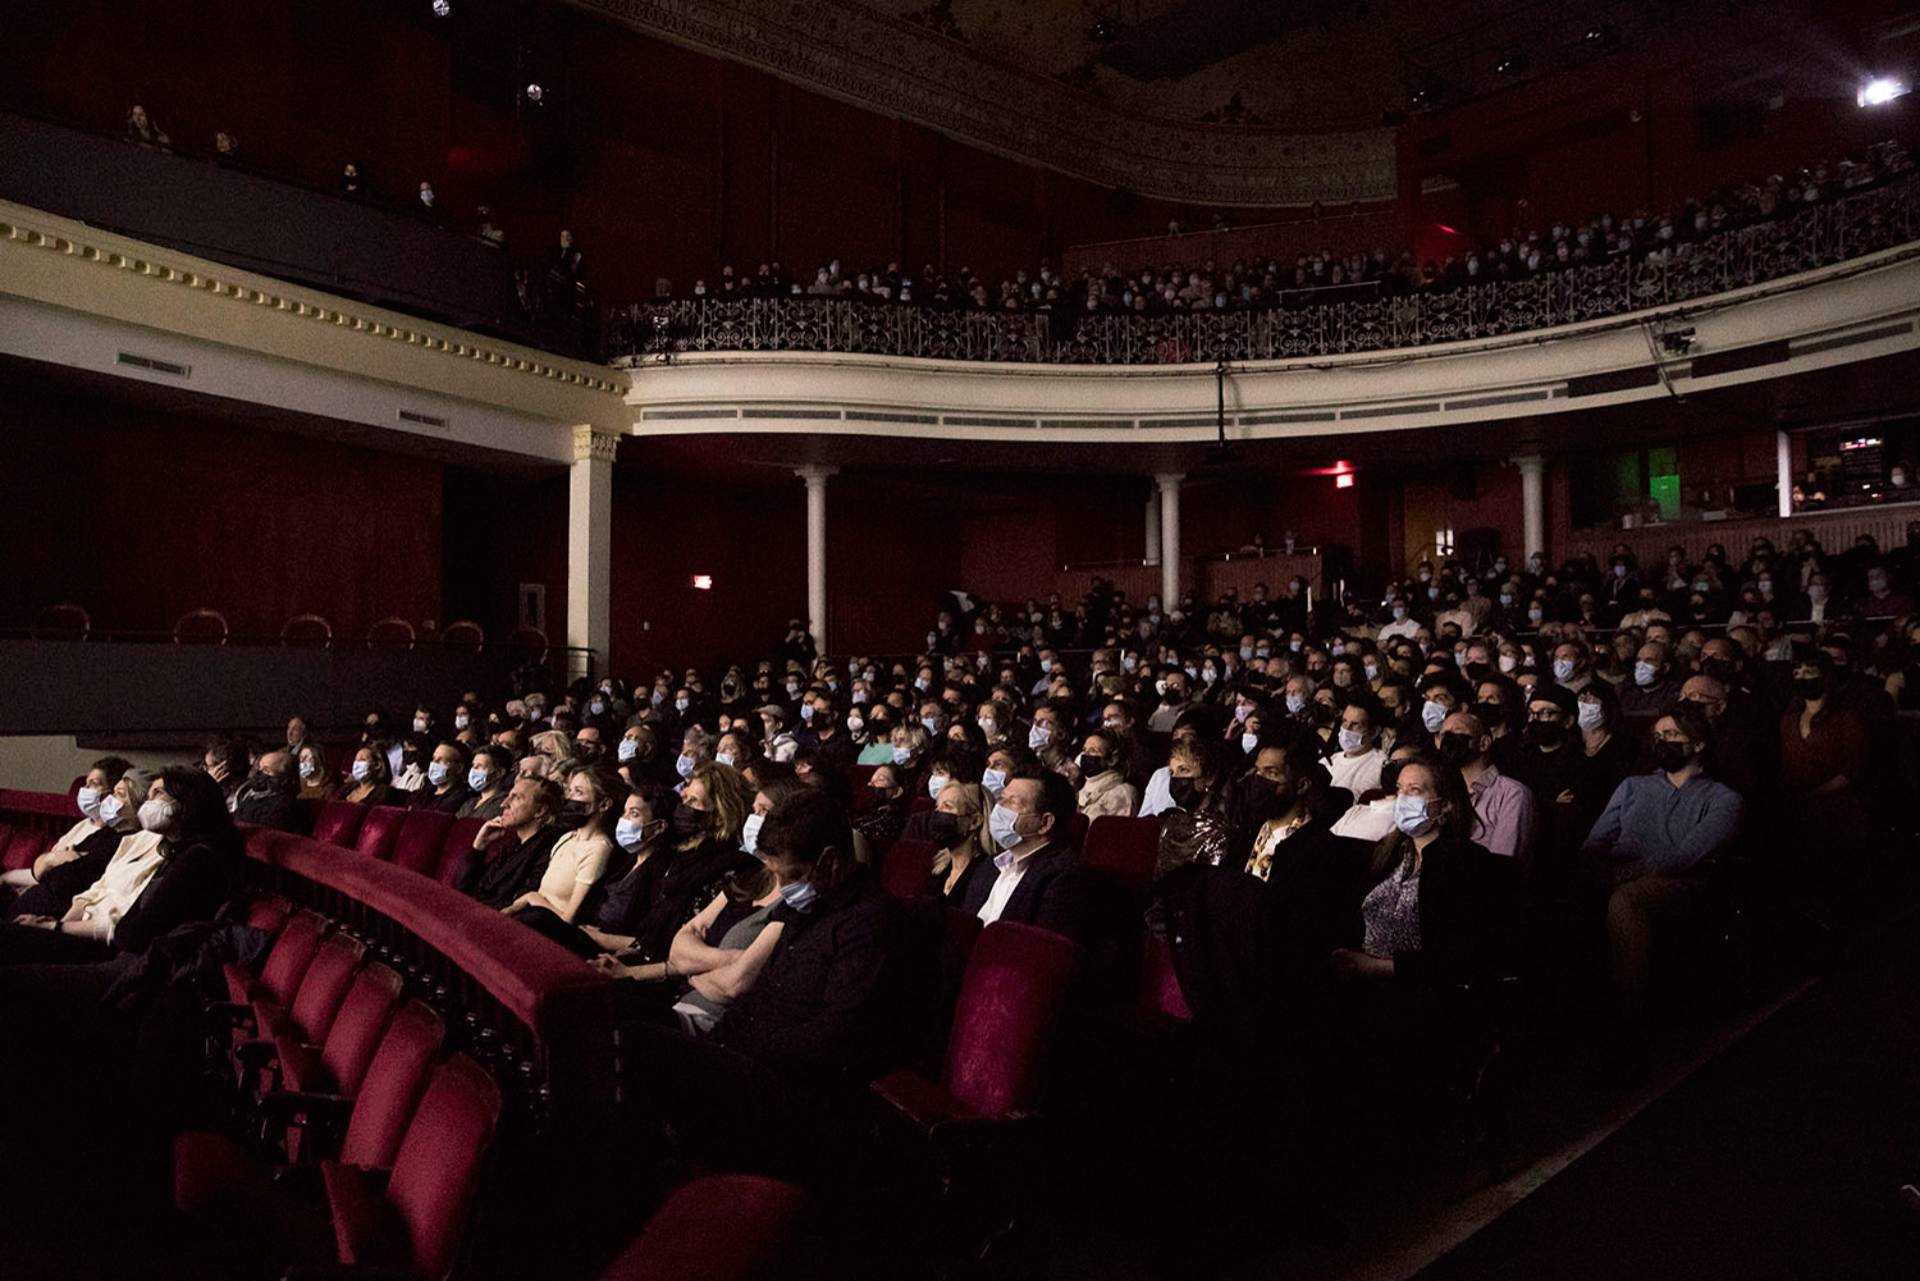 Crowd in a theatre